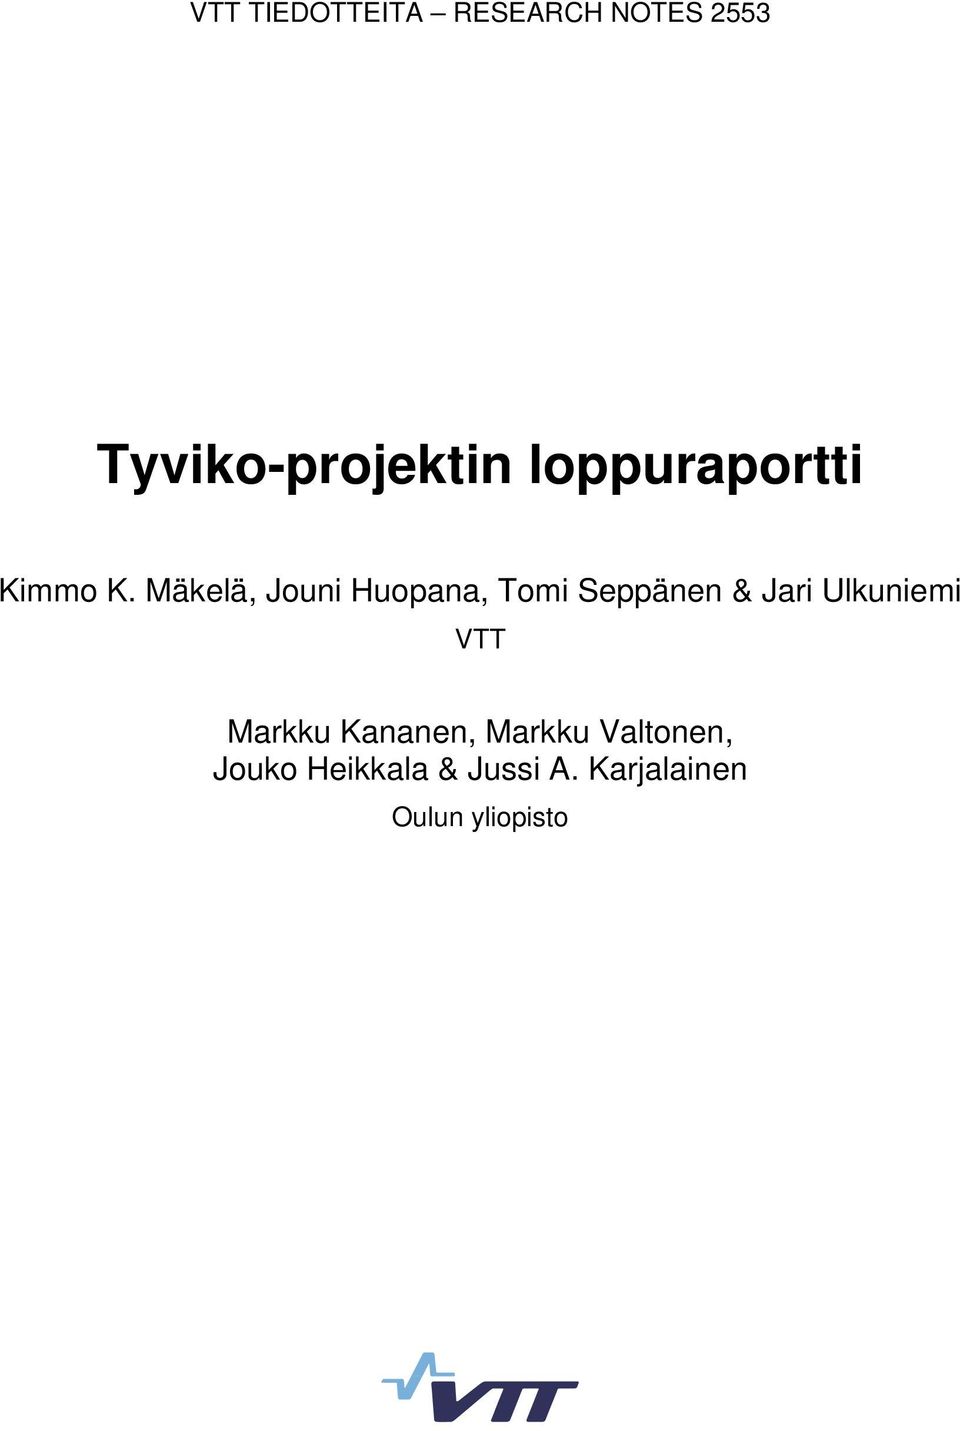 Mäkelä, Jouni Huopana, Tomi Seppänen & Jari Ulkuniemi